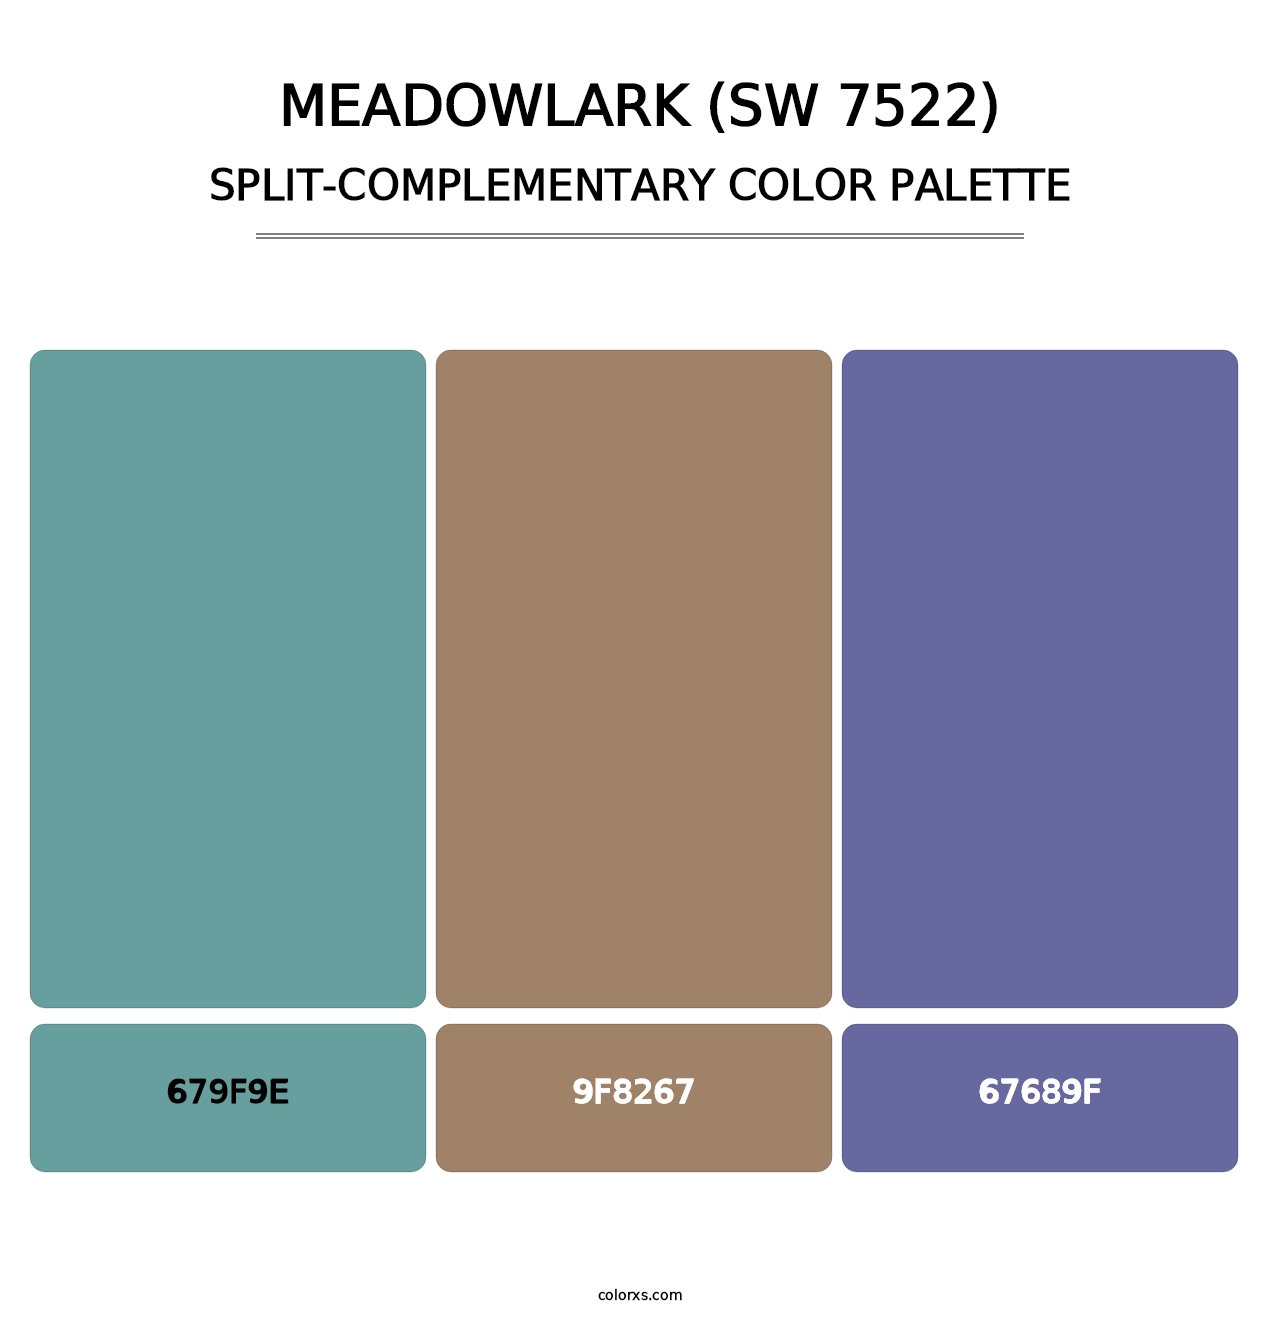 Meadowlark (SW 7522) - Split-Complementary Color Palette